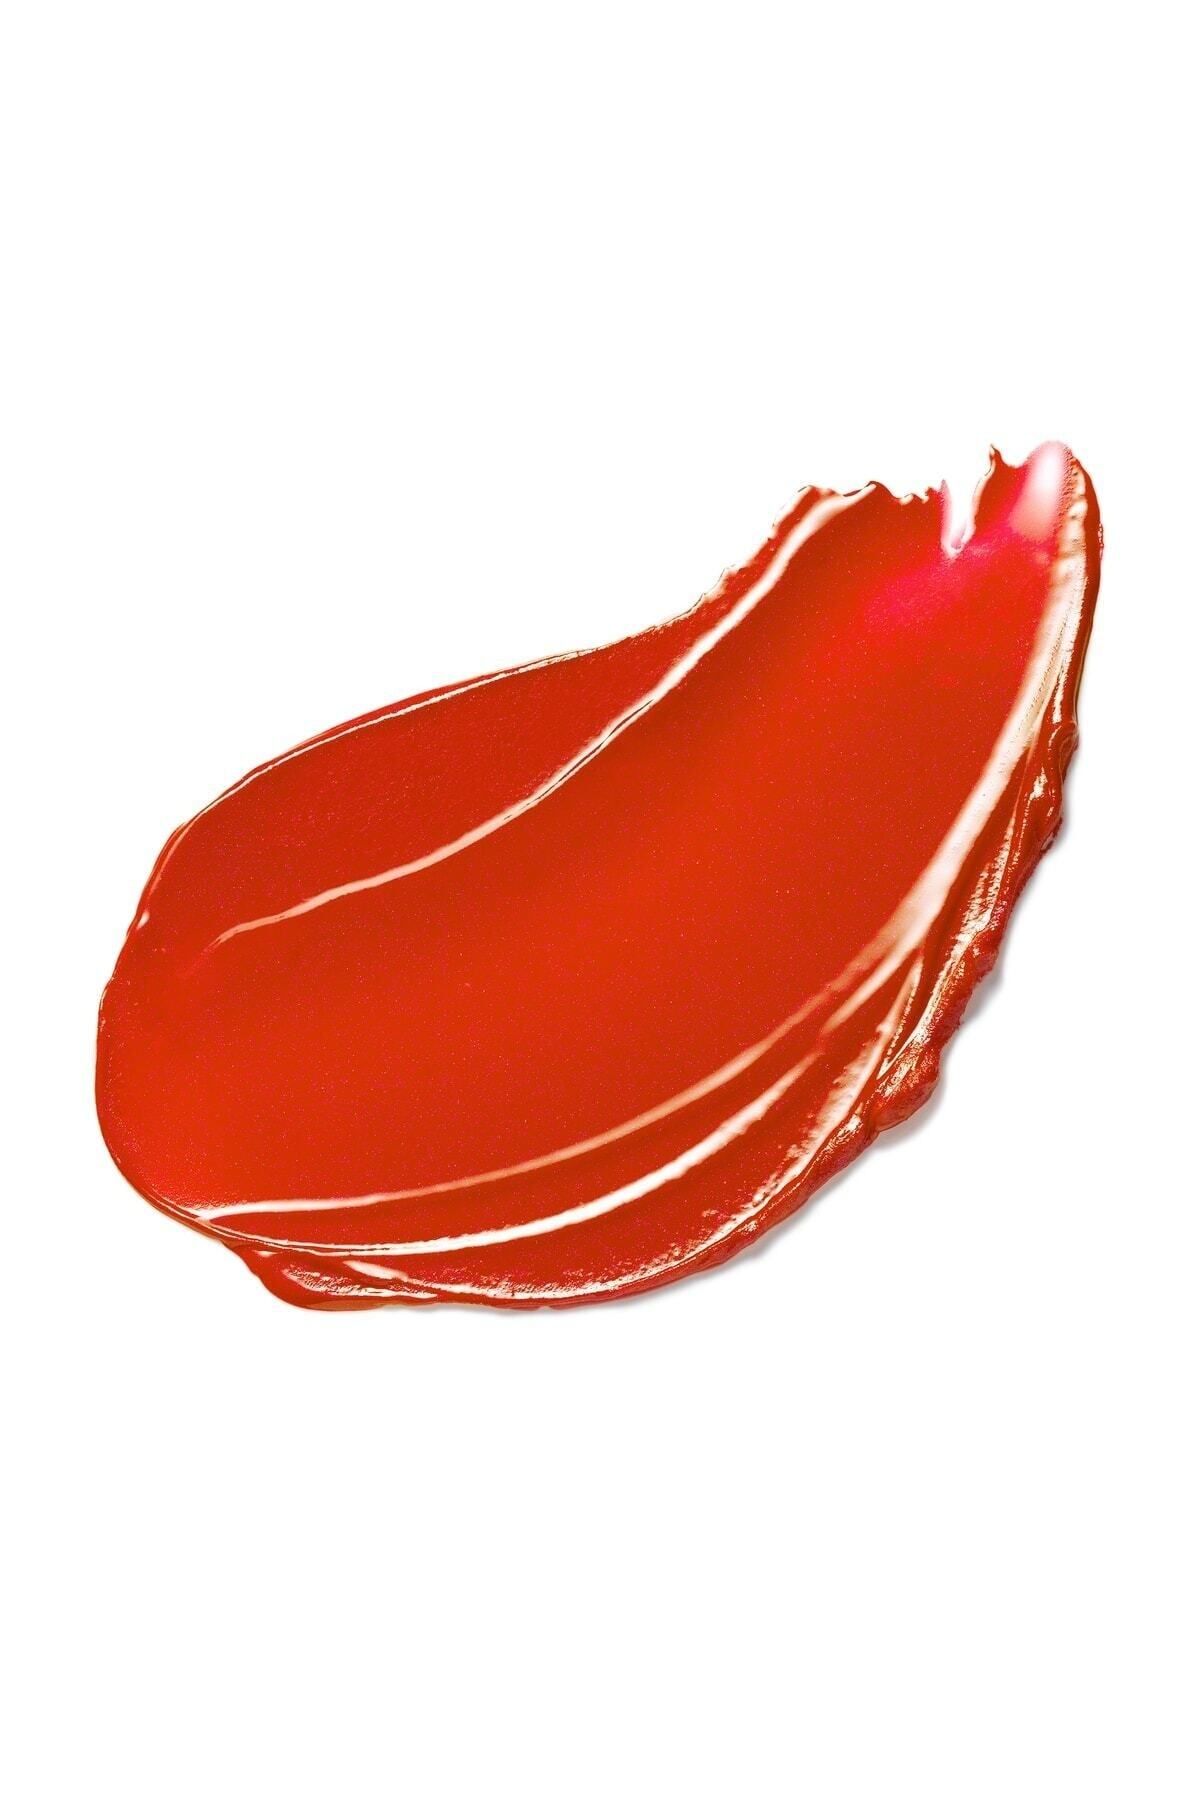 Estee Lauder رژلب شفاف درخشان کننده با رنگ‌های زنده و لوکس رنگ روشن قلبی 1.8 گرم